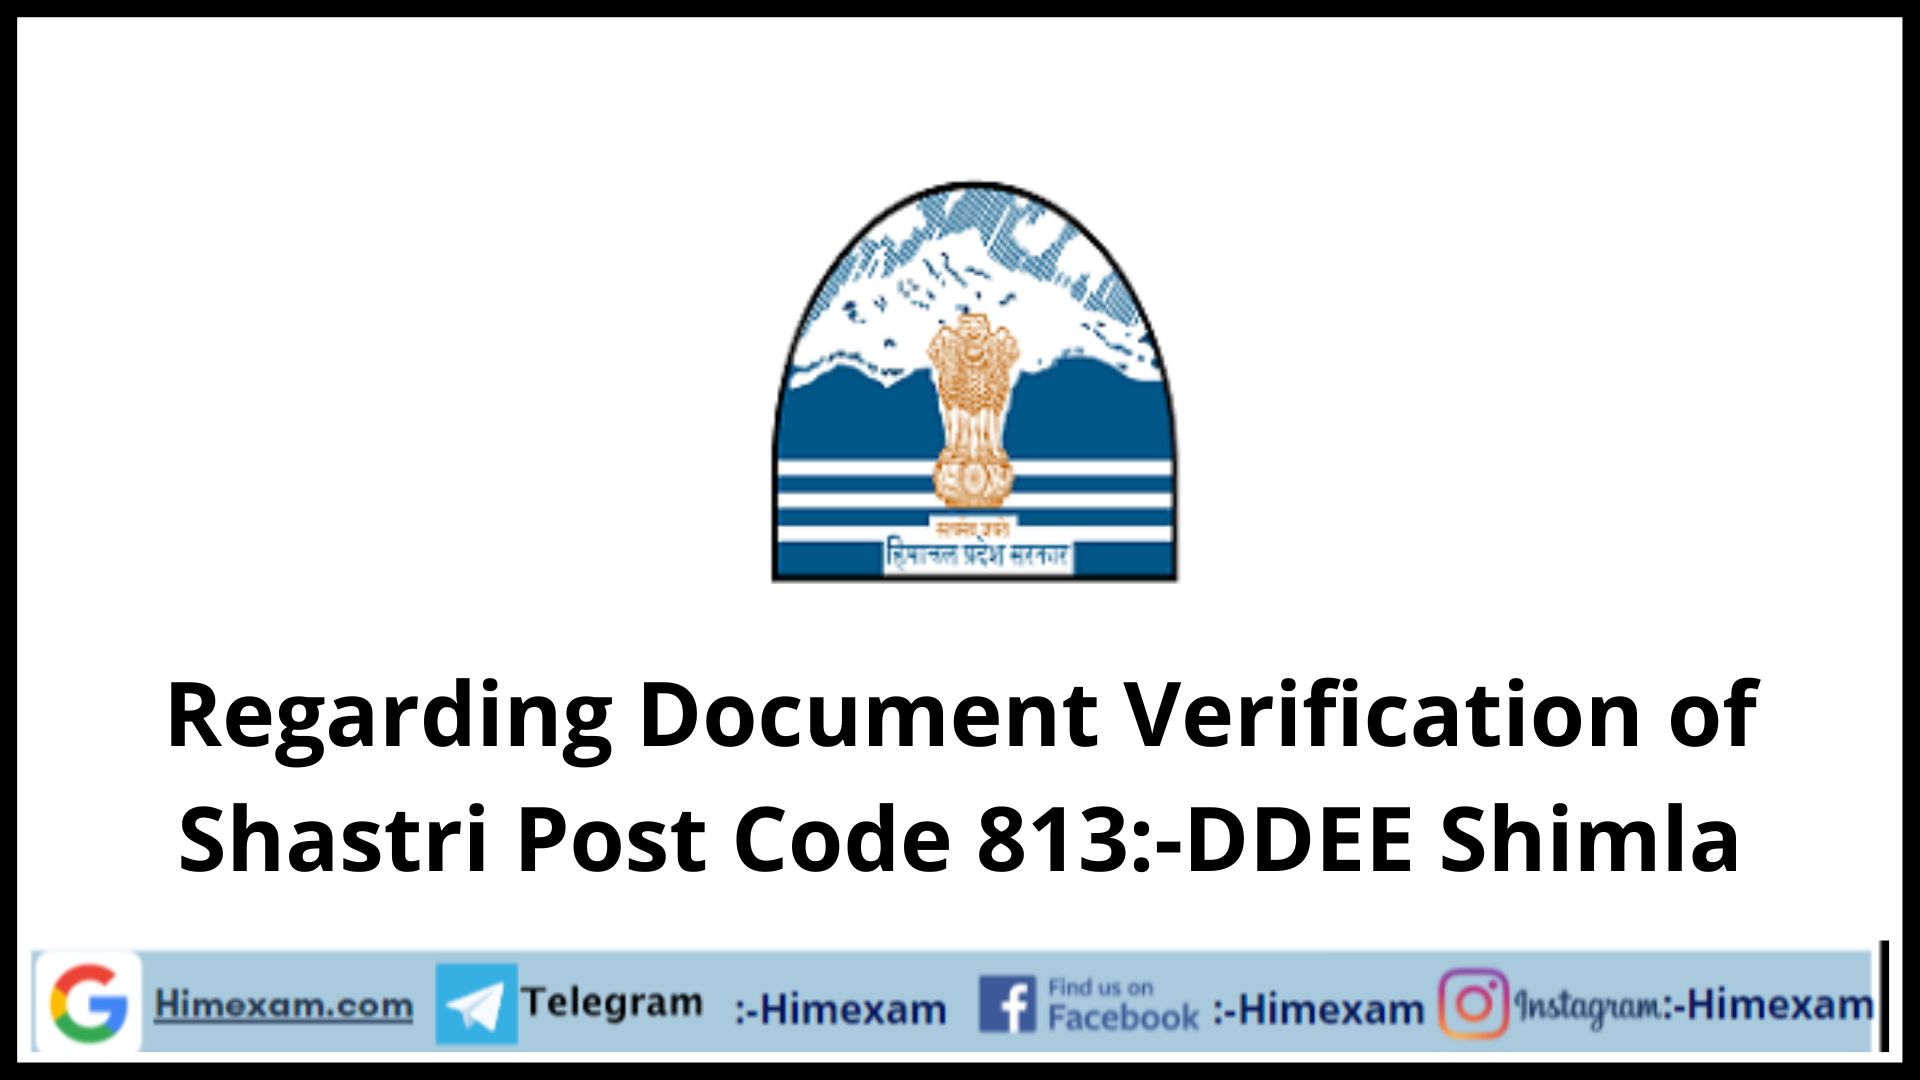 Regarding Document Verification of Shastri Post Code 813:-DDEE Shimla